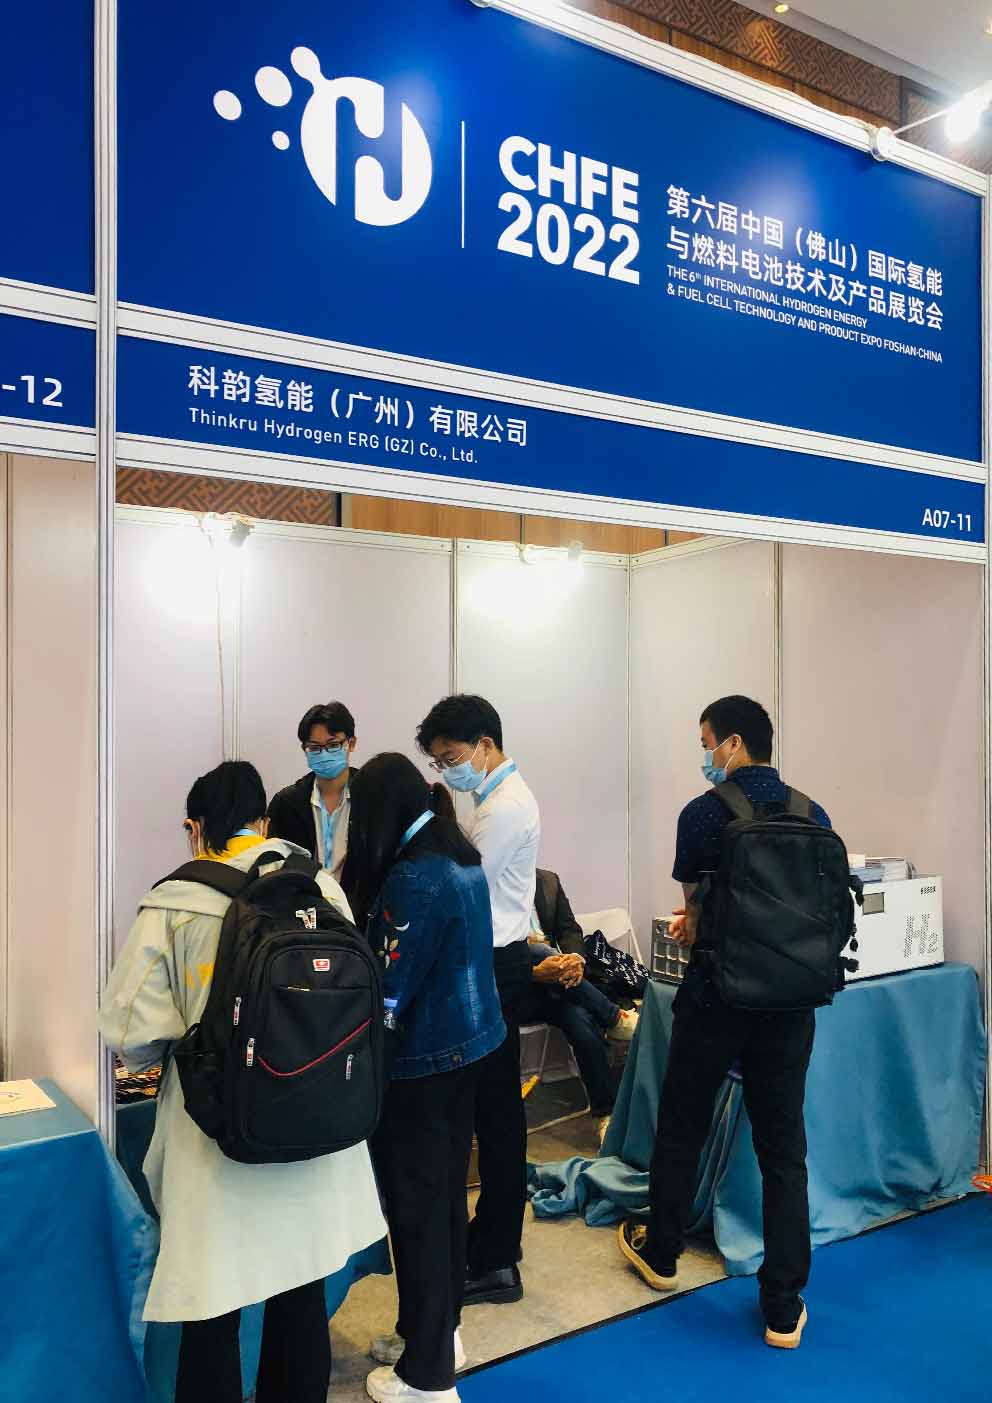 2022-FoShan Hydrogen Energy Industry Exhibition